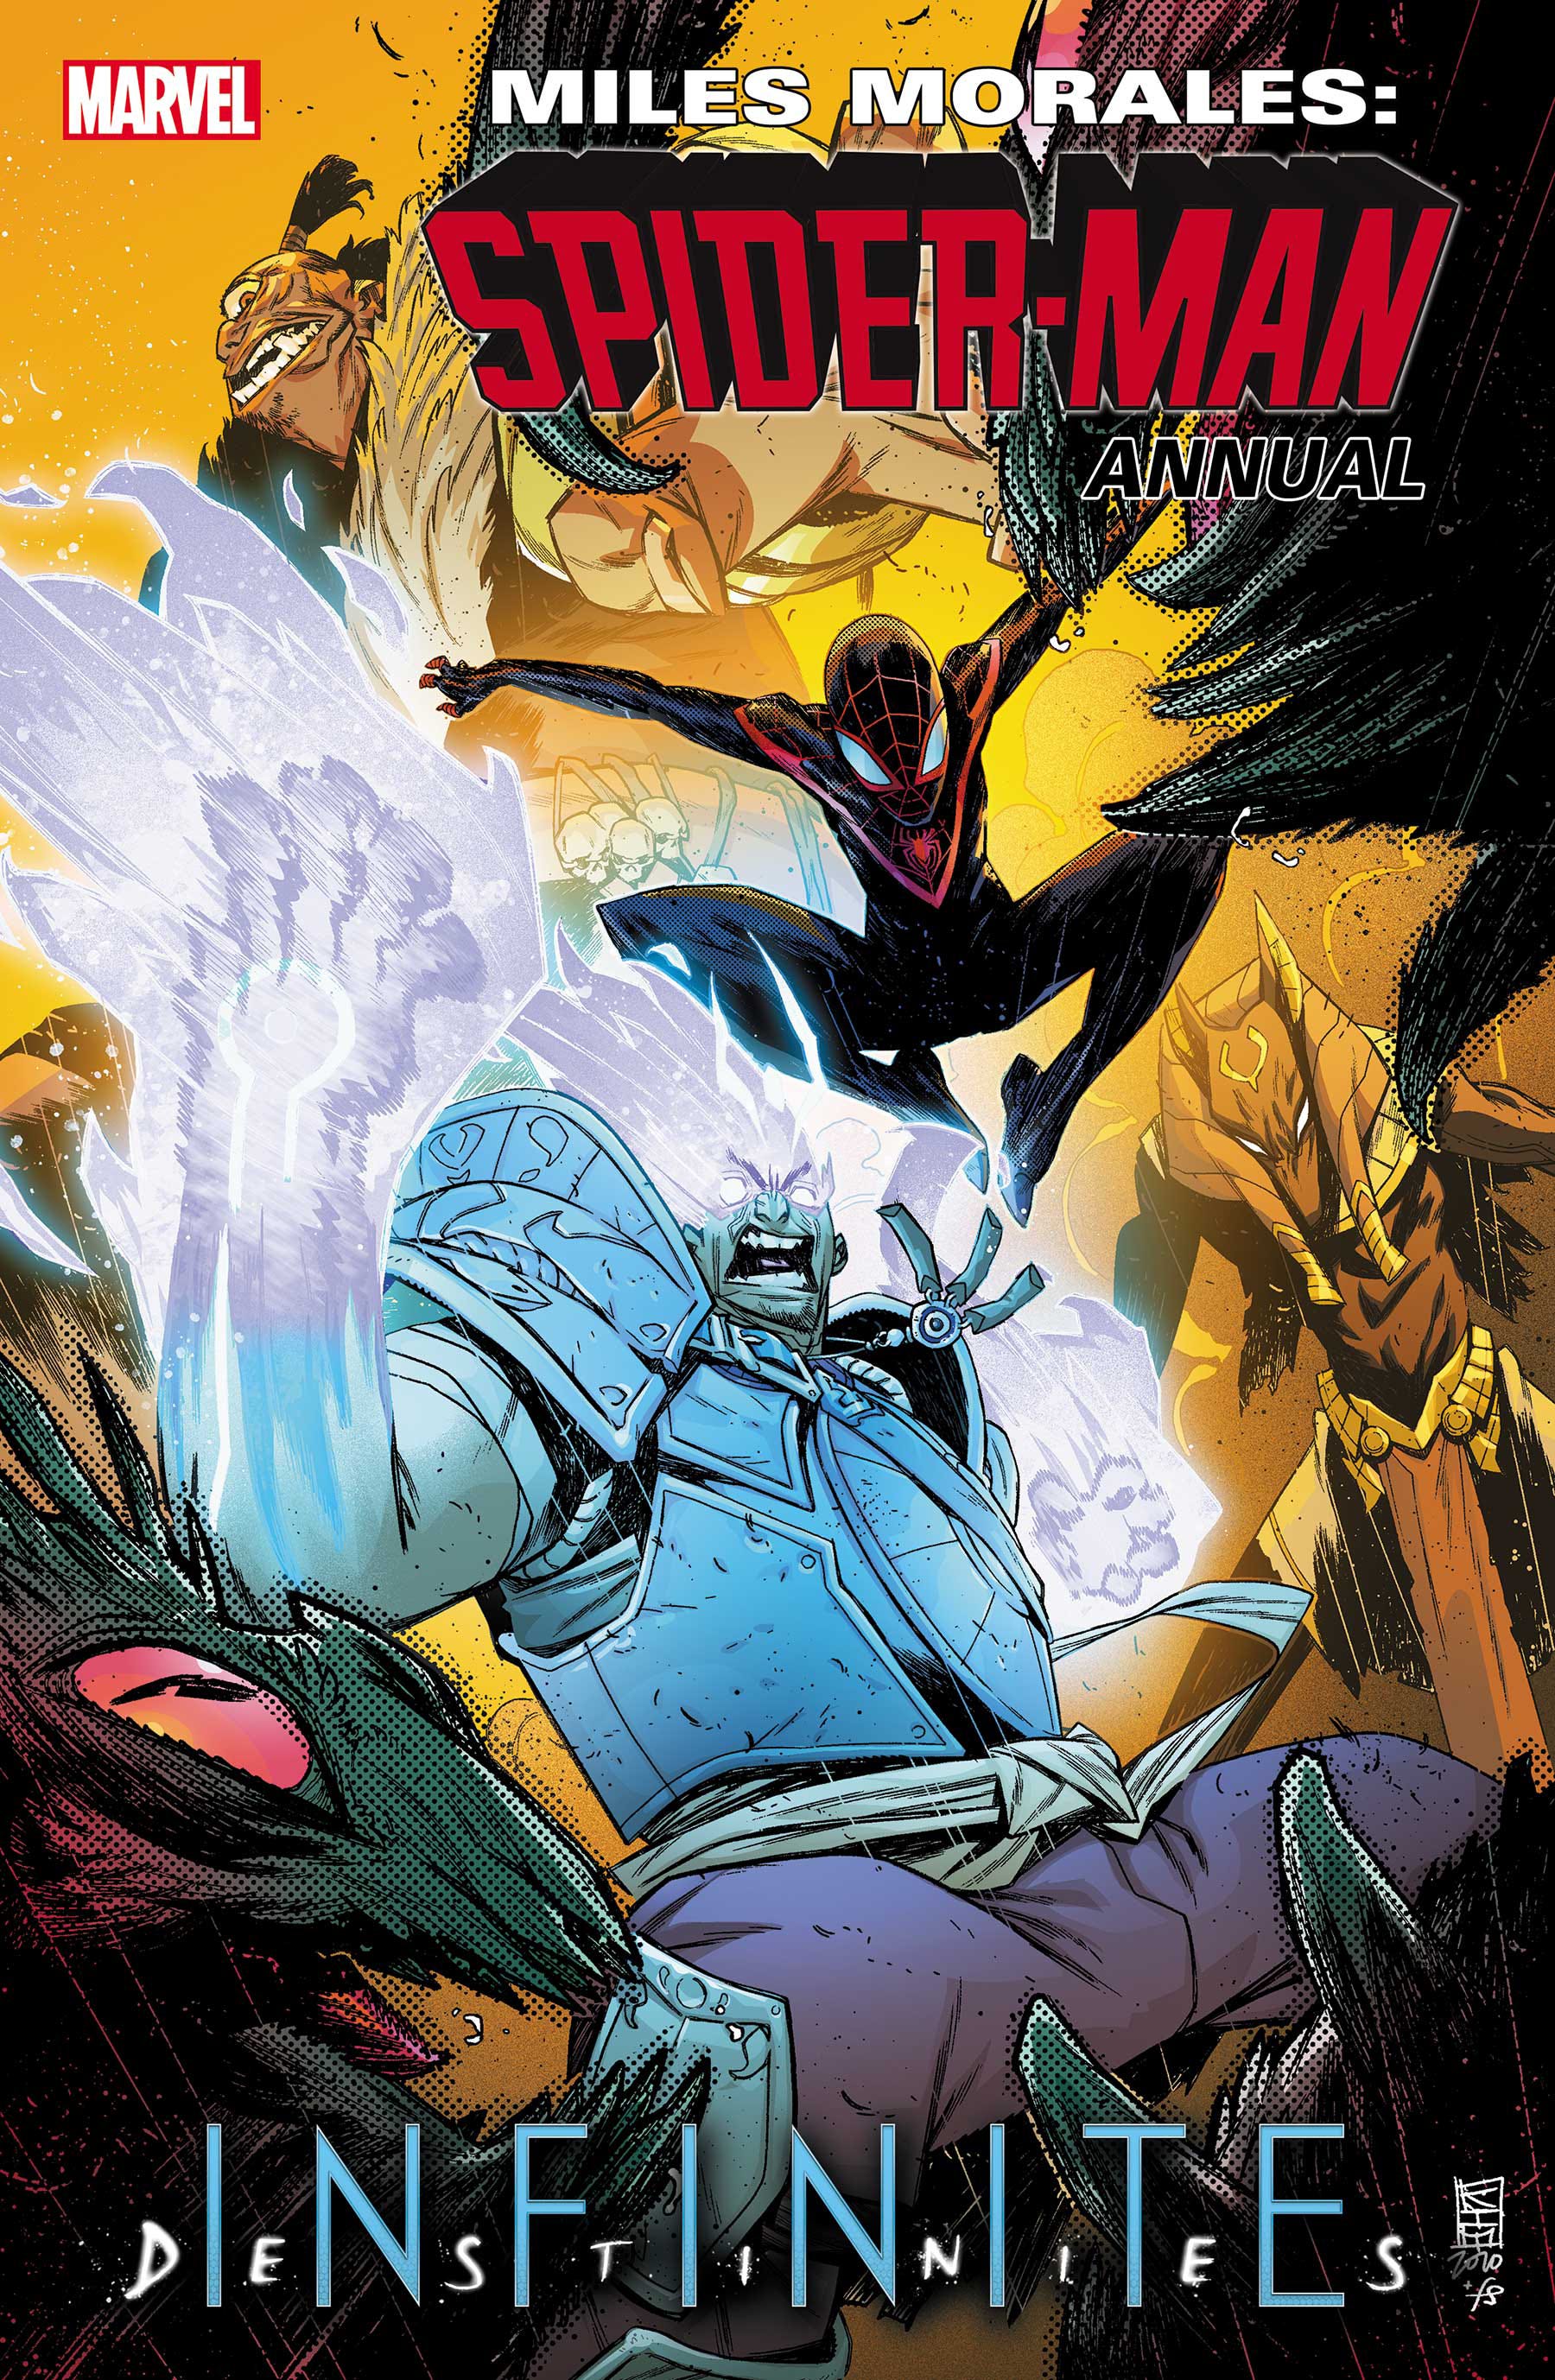 Miles Morales Spider-Man Annual #1 (Infinite Destinies)